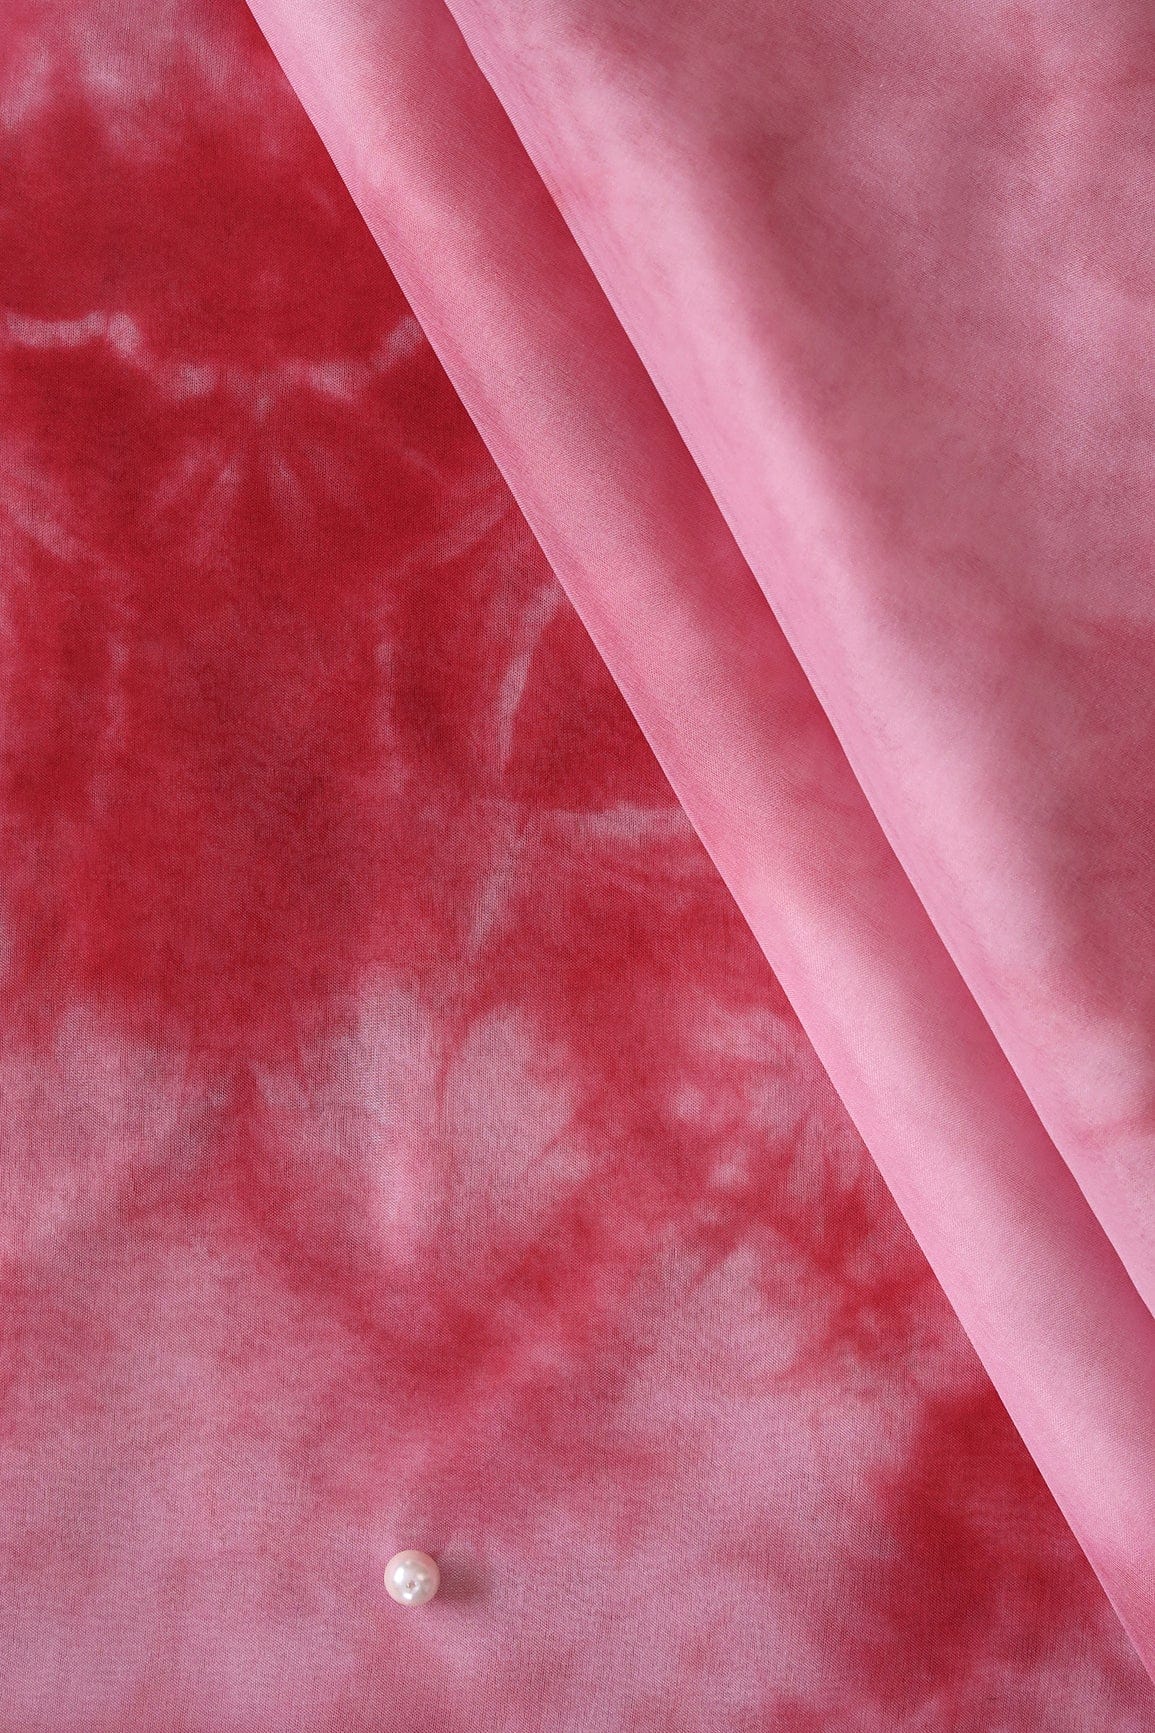 doeraa Prints Red And Pink Tie & Dye Shibori Print On Organza Fabric